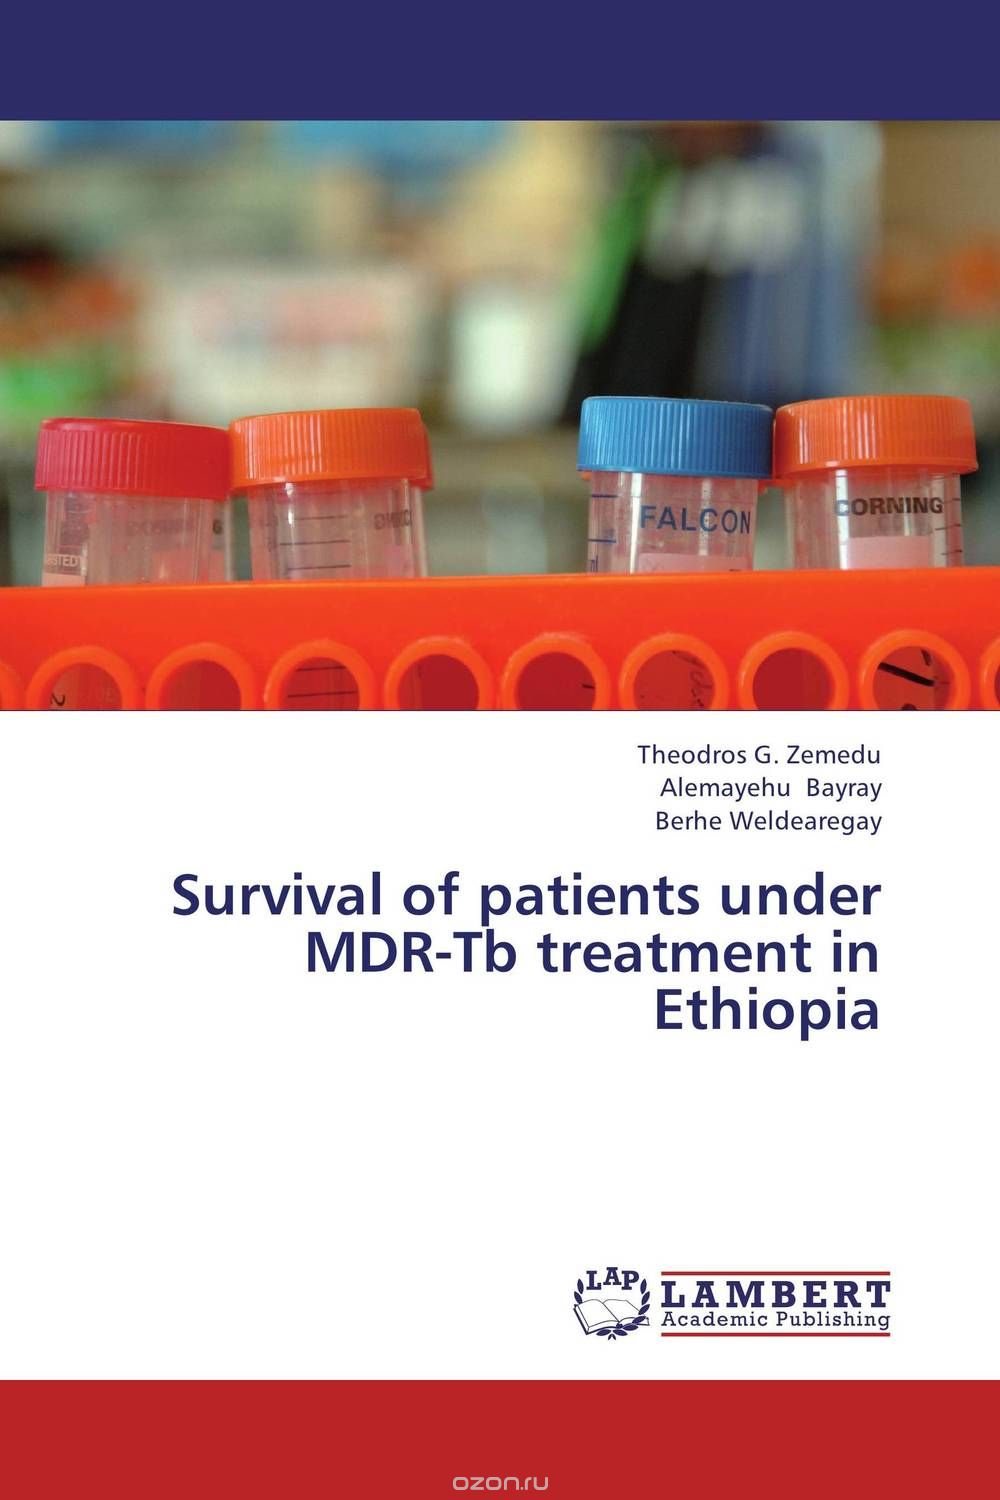 Скачать книгу "Survival of patients under MDR-Tb treatment in Ethiopia"